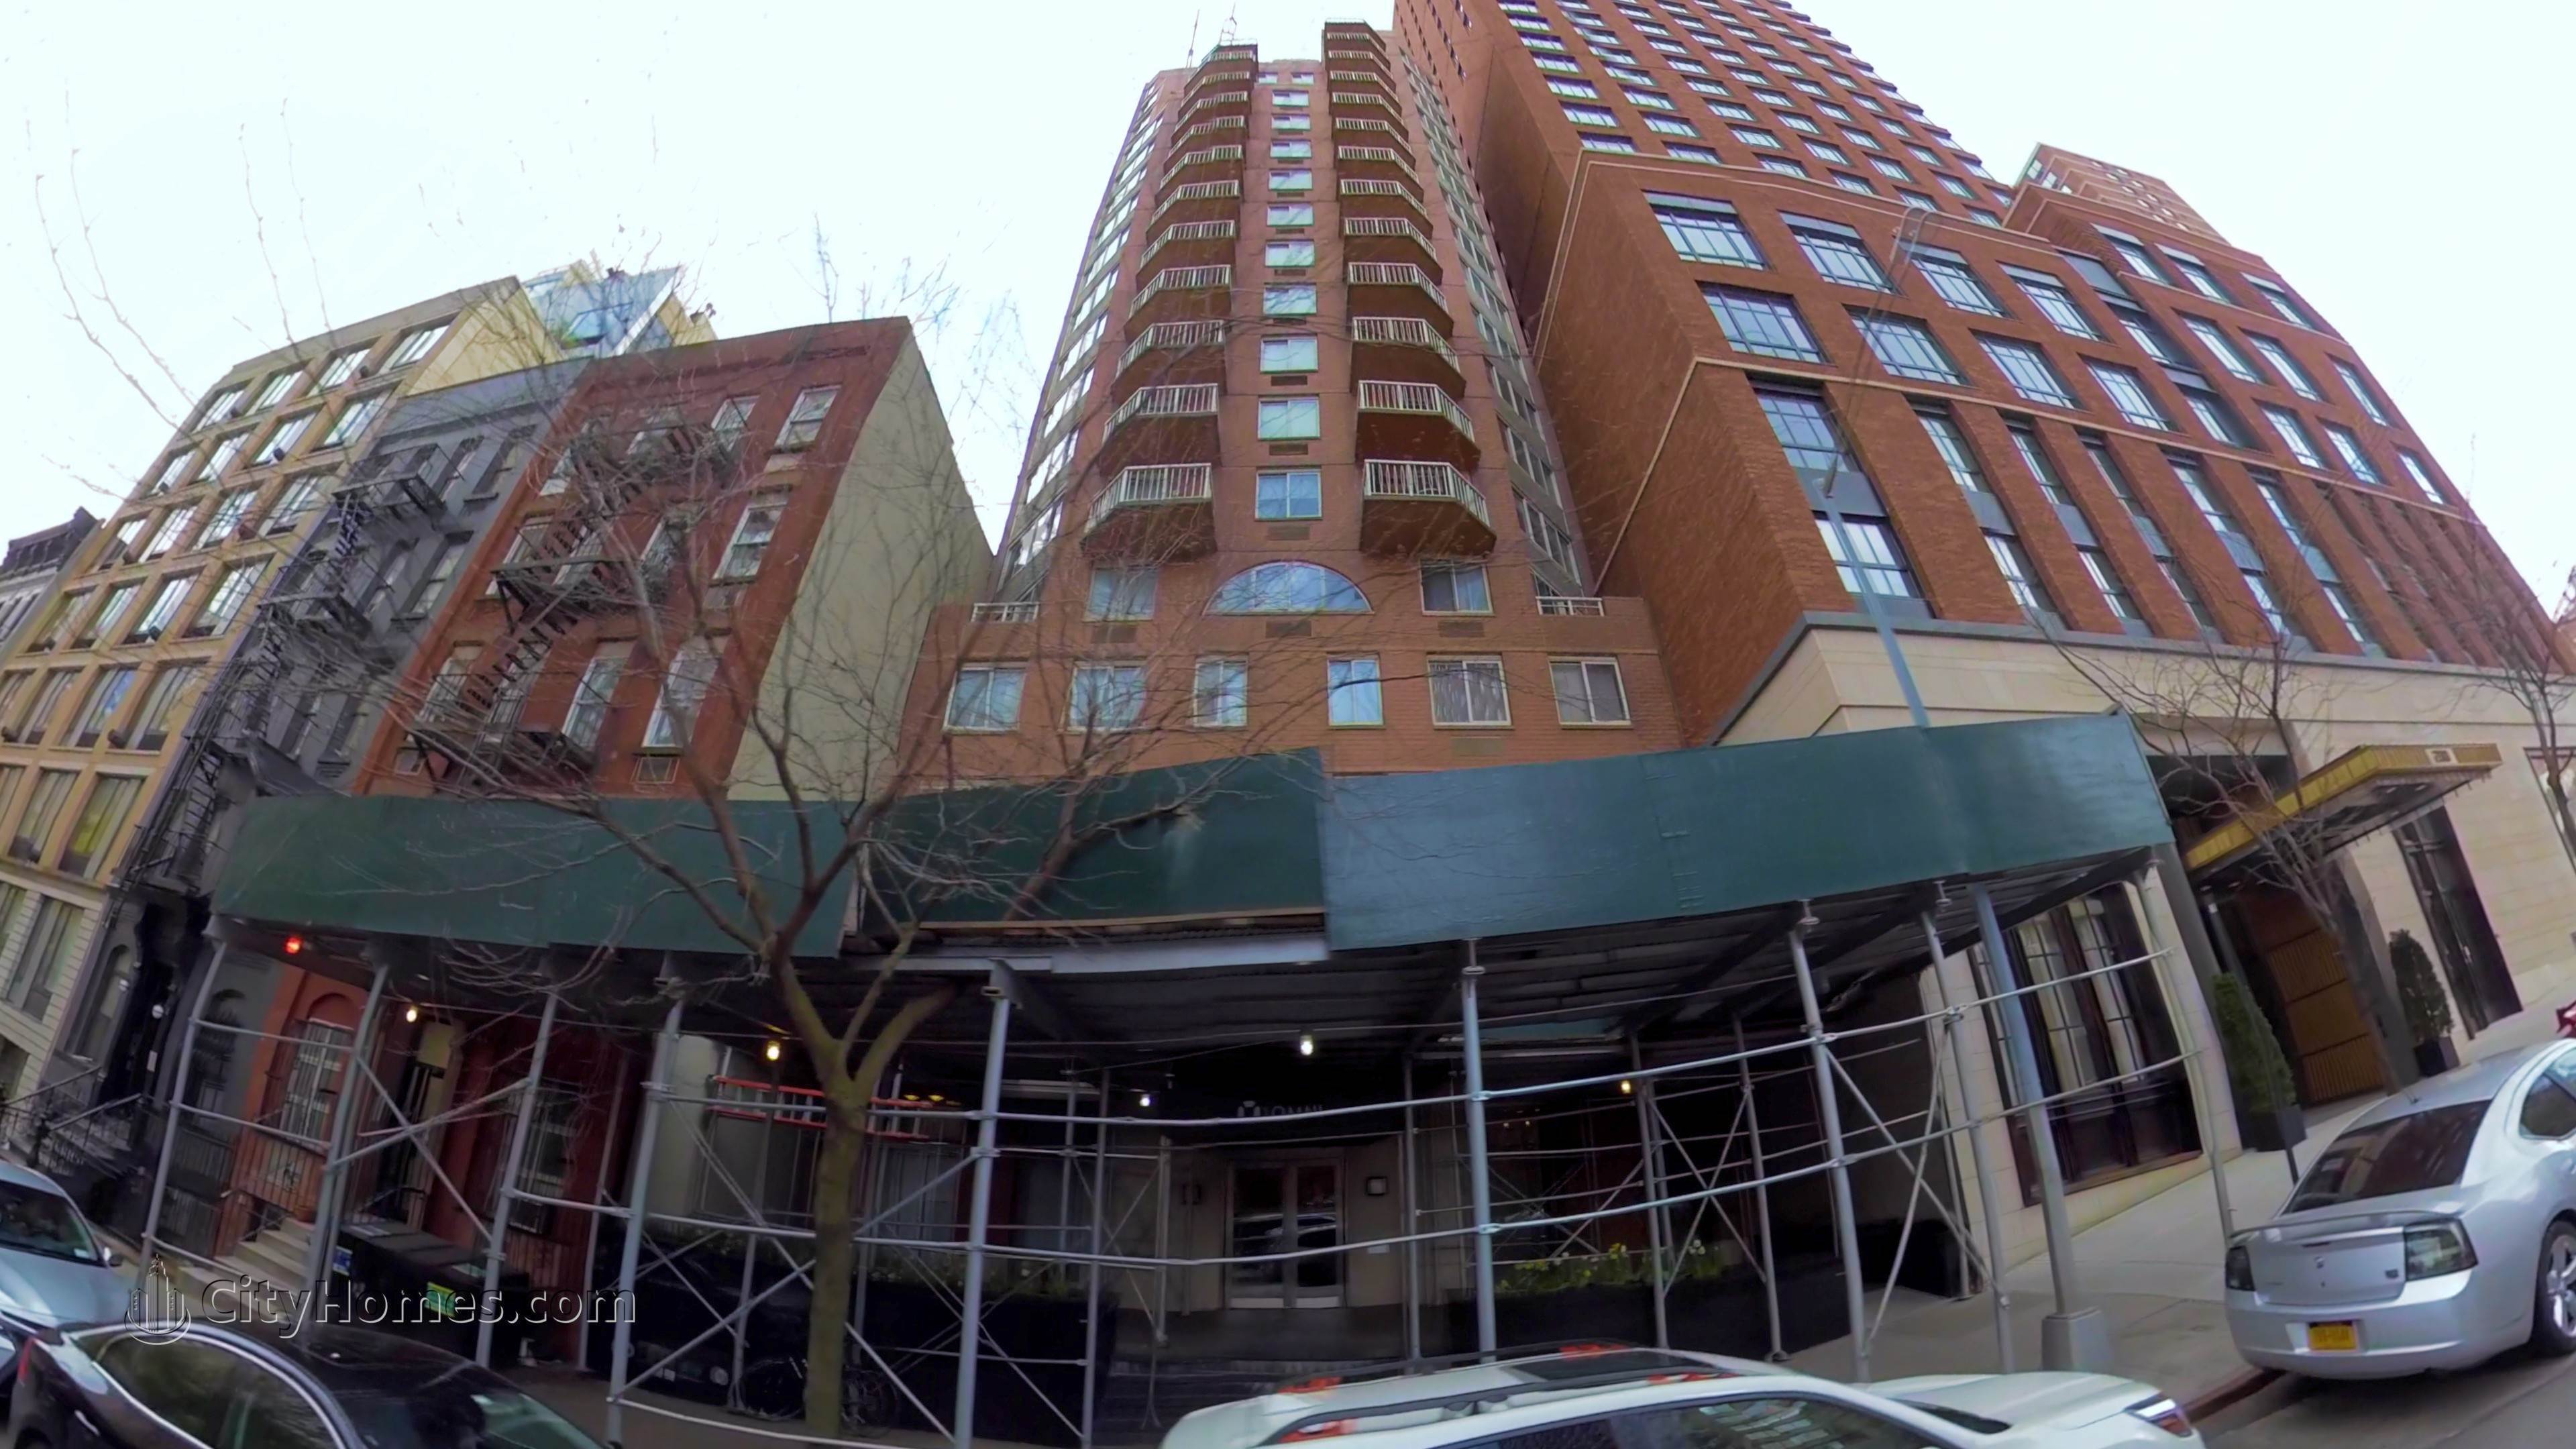 The Omni byggnad vid 206 East 95th Street, Yorkville, Manhattan, NY 10128